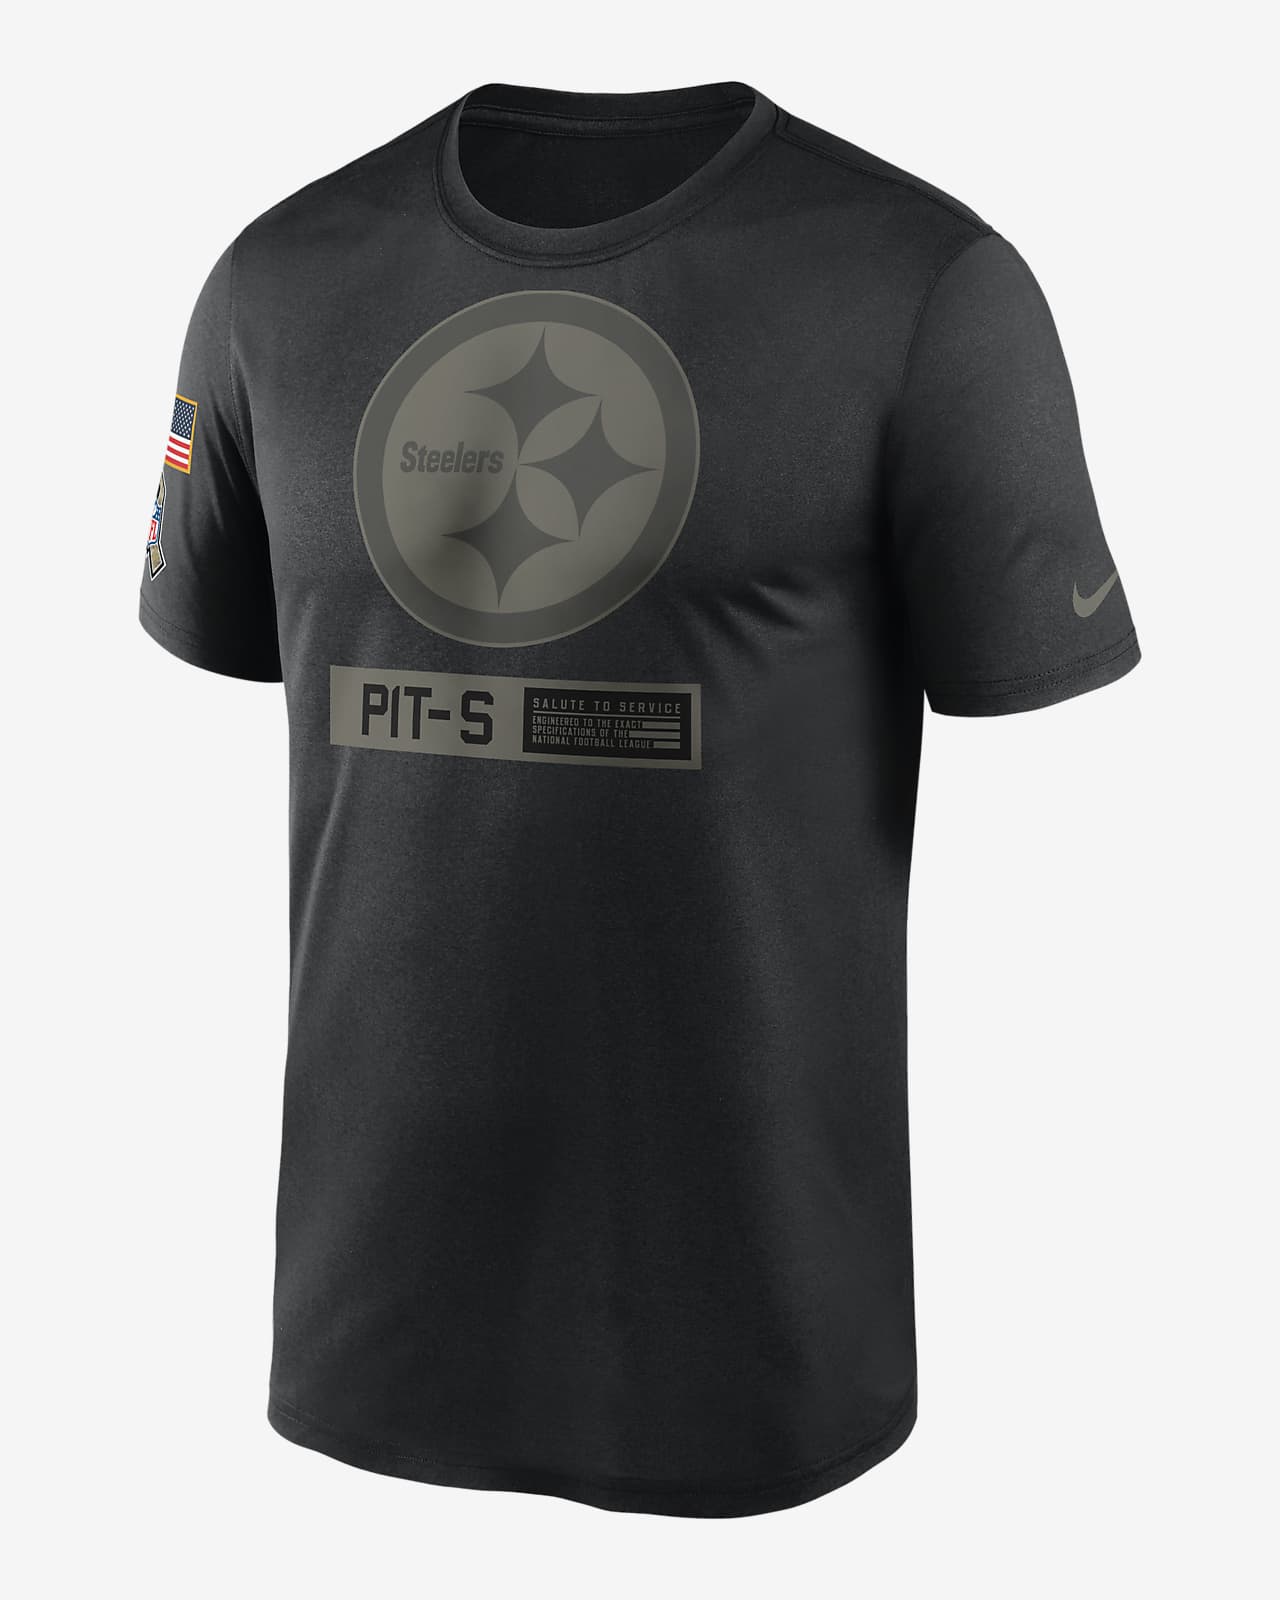 NFL Steelers) Men's T-Shirt. Nike 